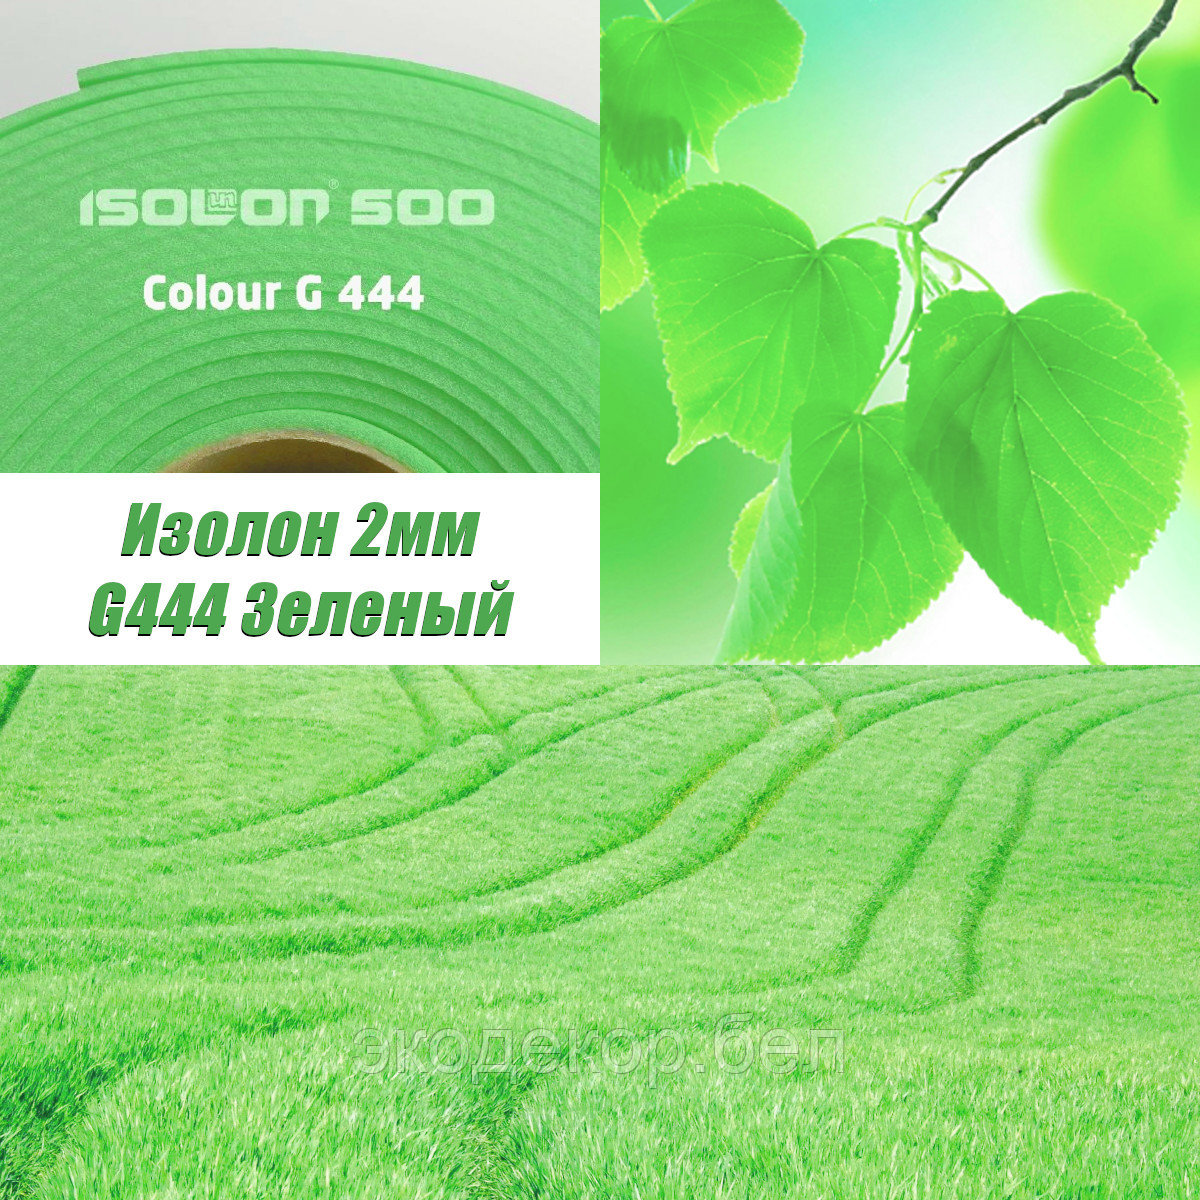 Isolon 500 (Изолон) 0,75м. G444 Зеленый, 2мм